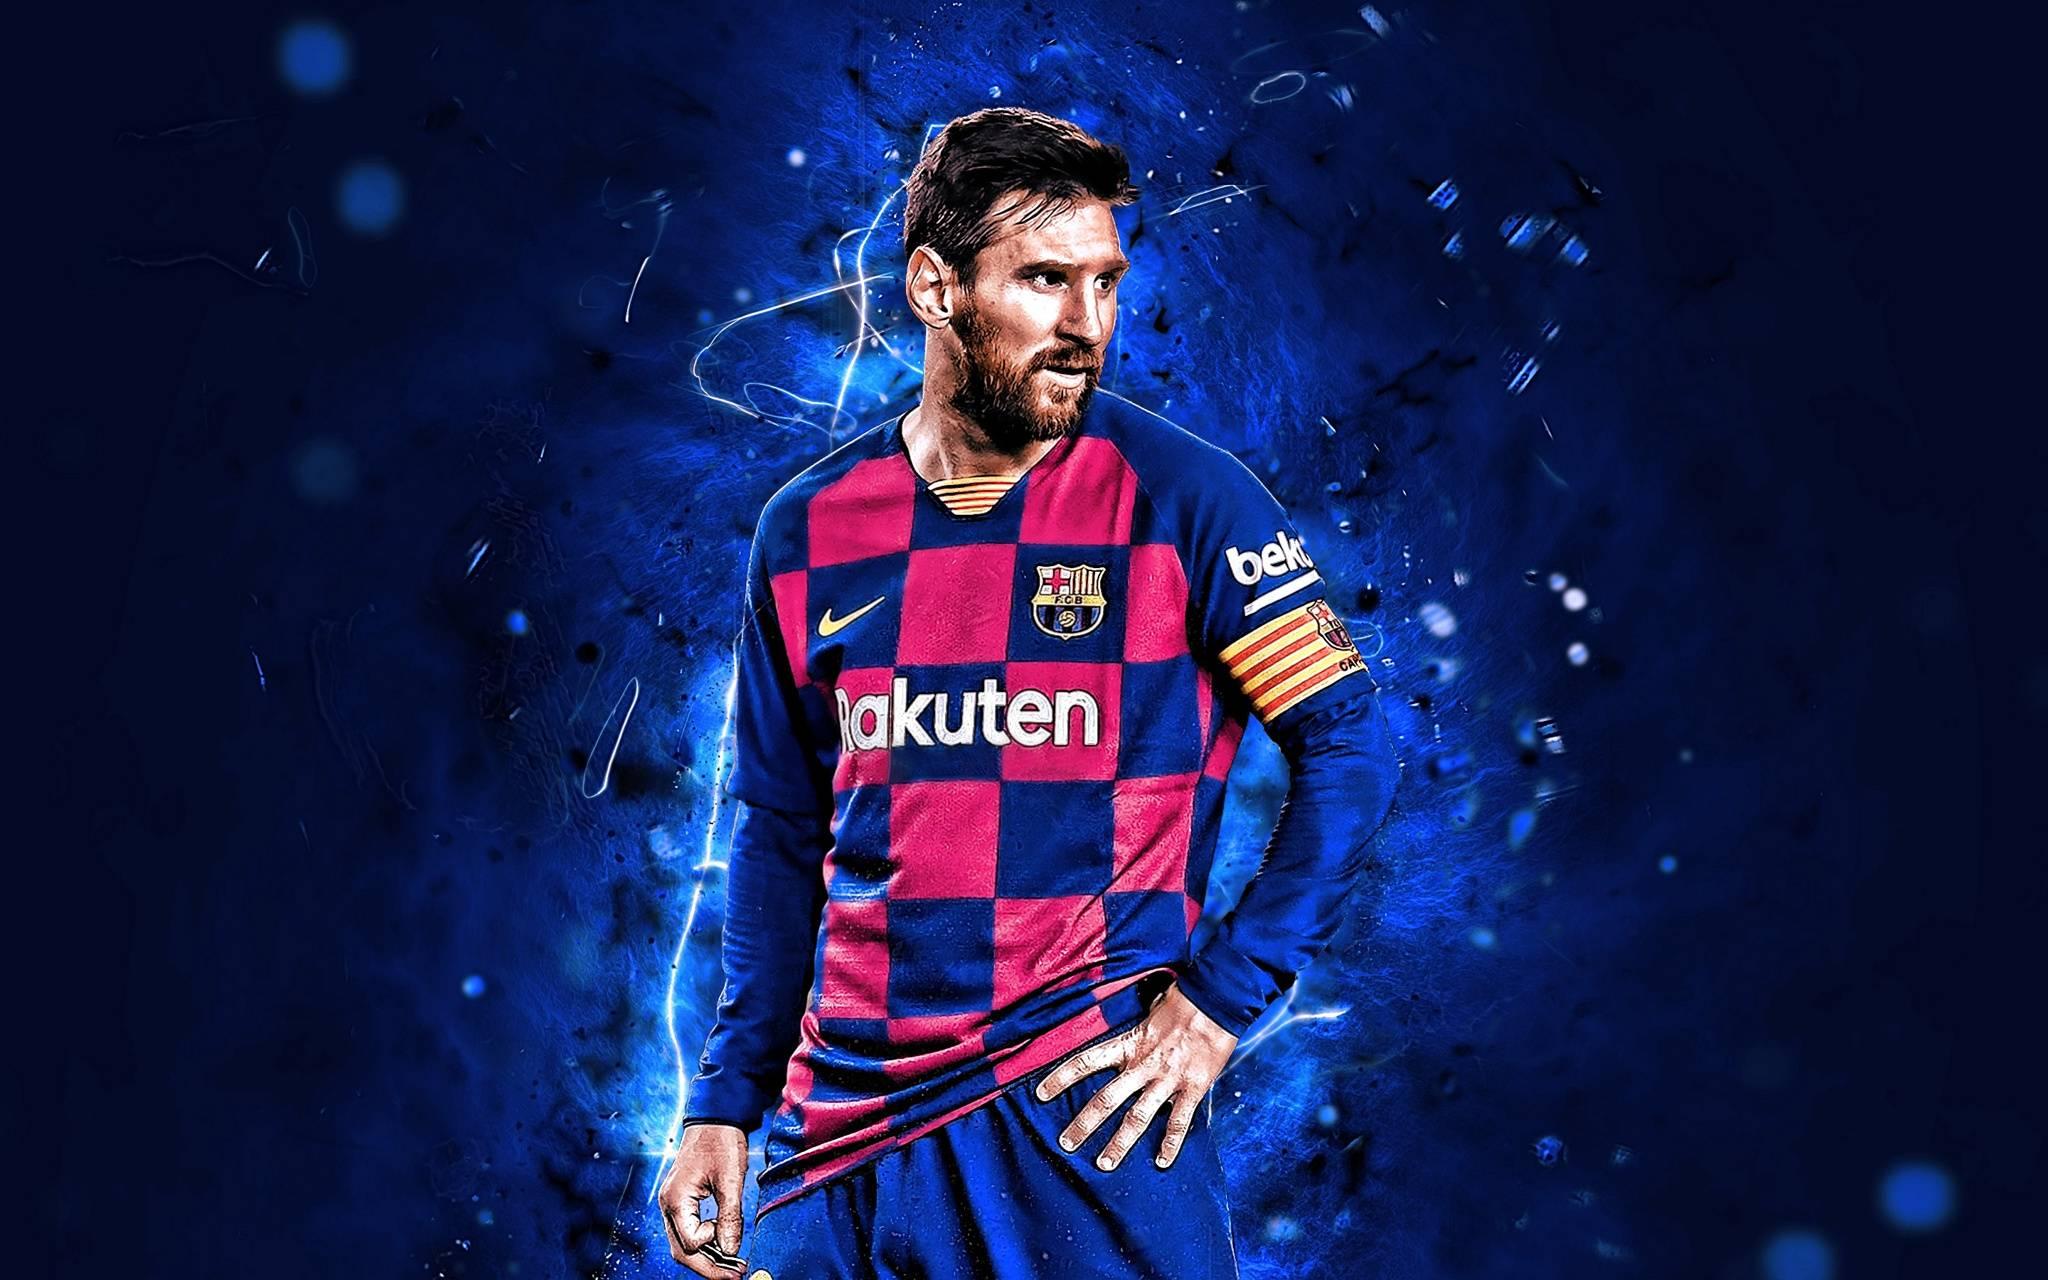 2048 x 1280 · jpeg - Leo Messi 2020 wallpaper by ElBis42 - ec - Free on ZEDGETM